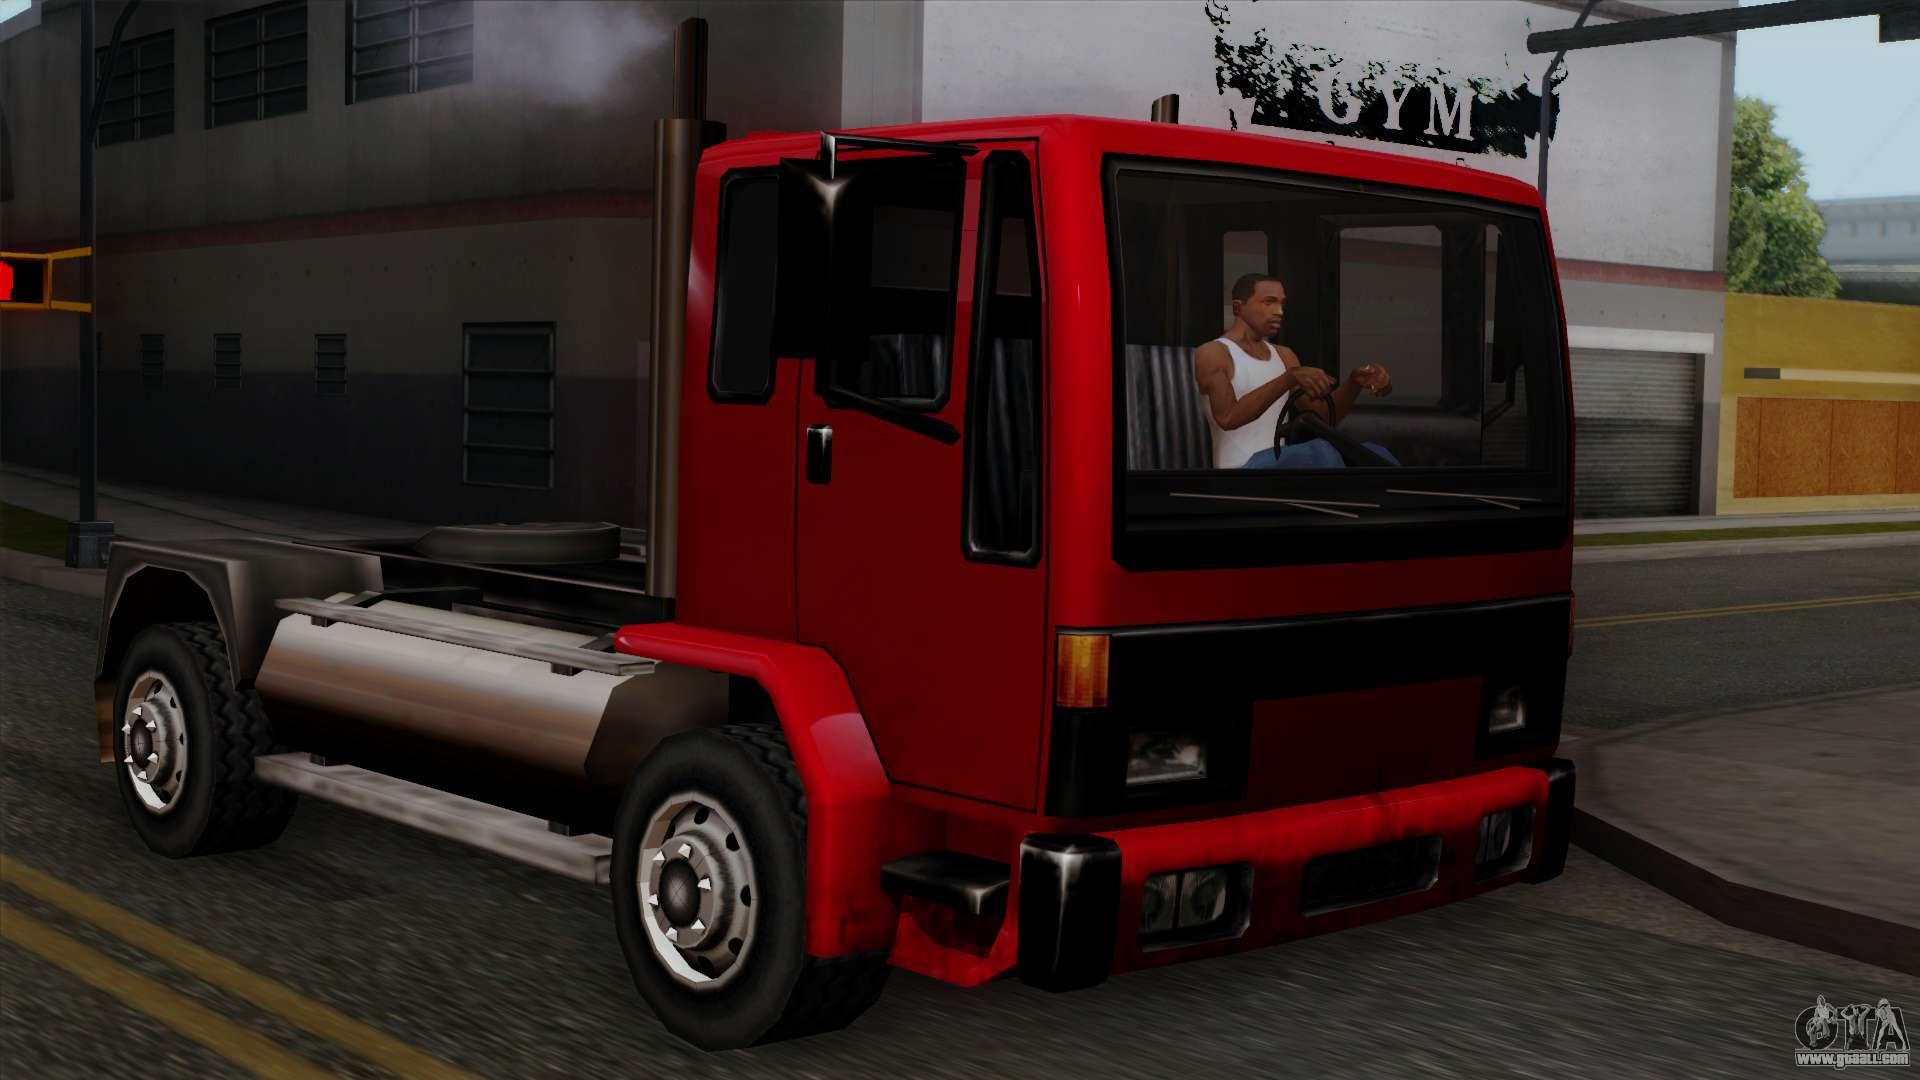 DFT-30 Truck for GTA San Andreas